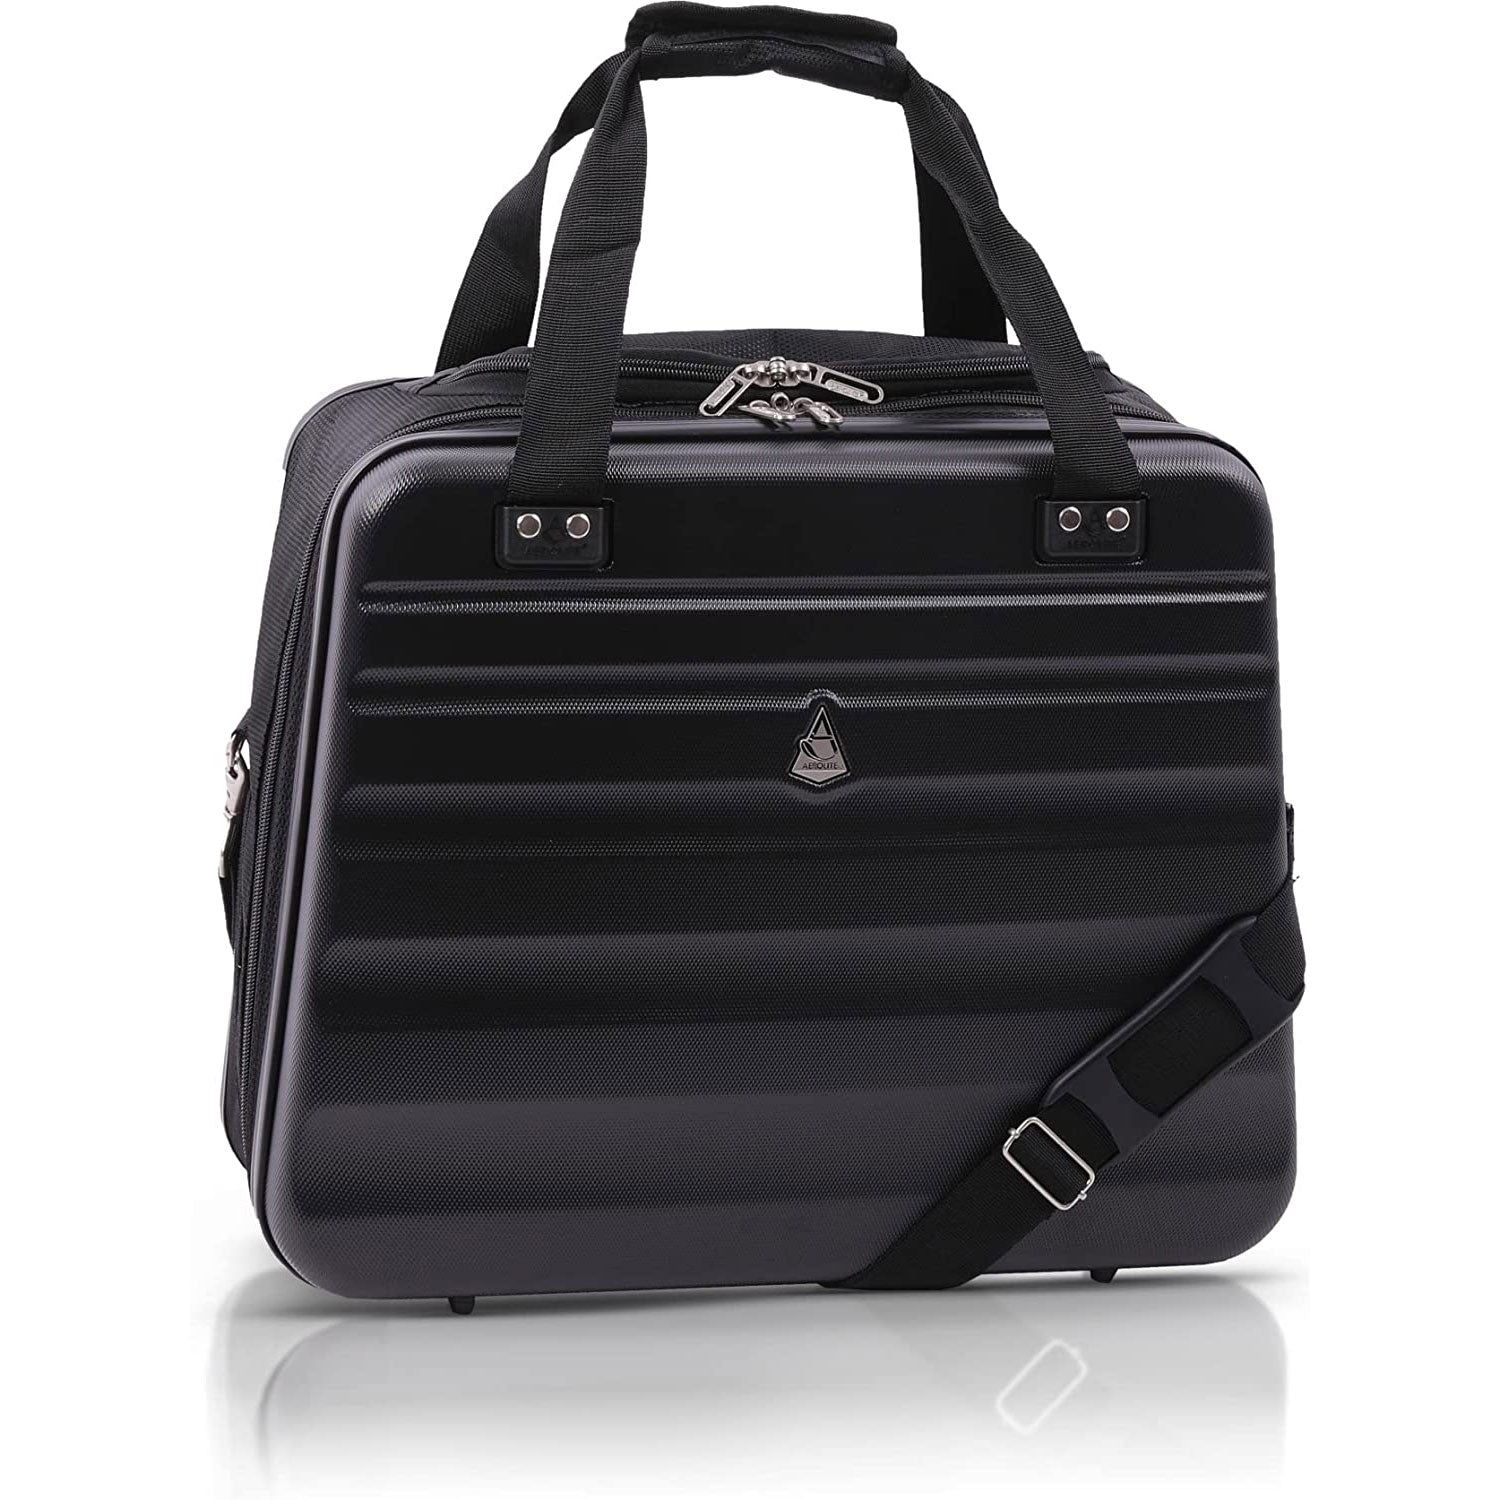 Aerolite 45x36x20 easyJet Maximum Size Hard ShellCarry On Hand Cabin  Luggage Underseat Flight Bag Suitcase 45x36x20 with 4 Wheels set of 2